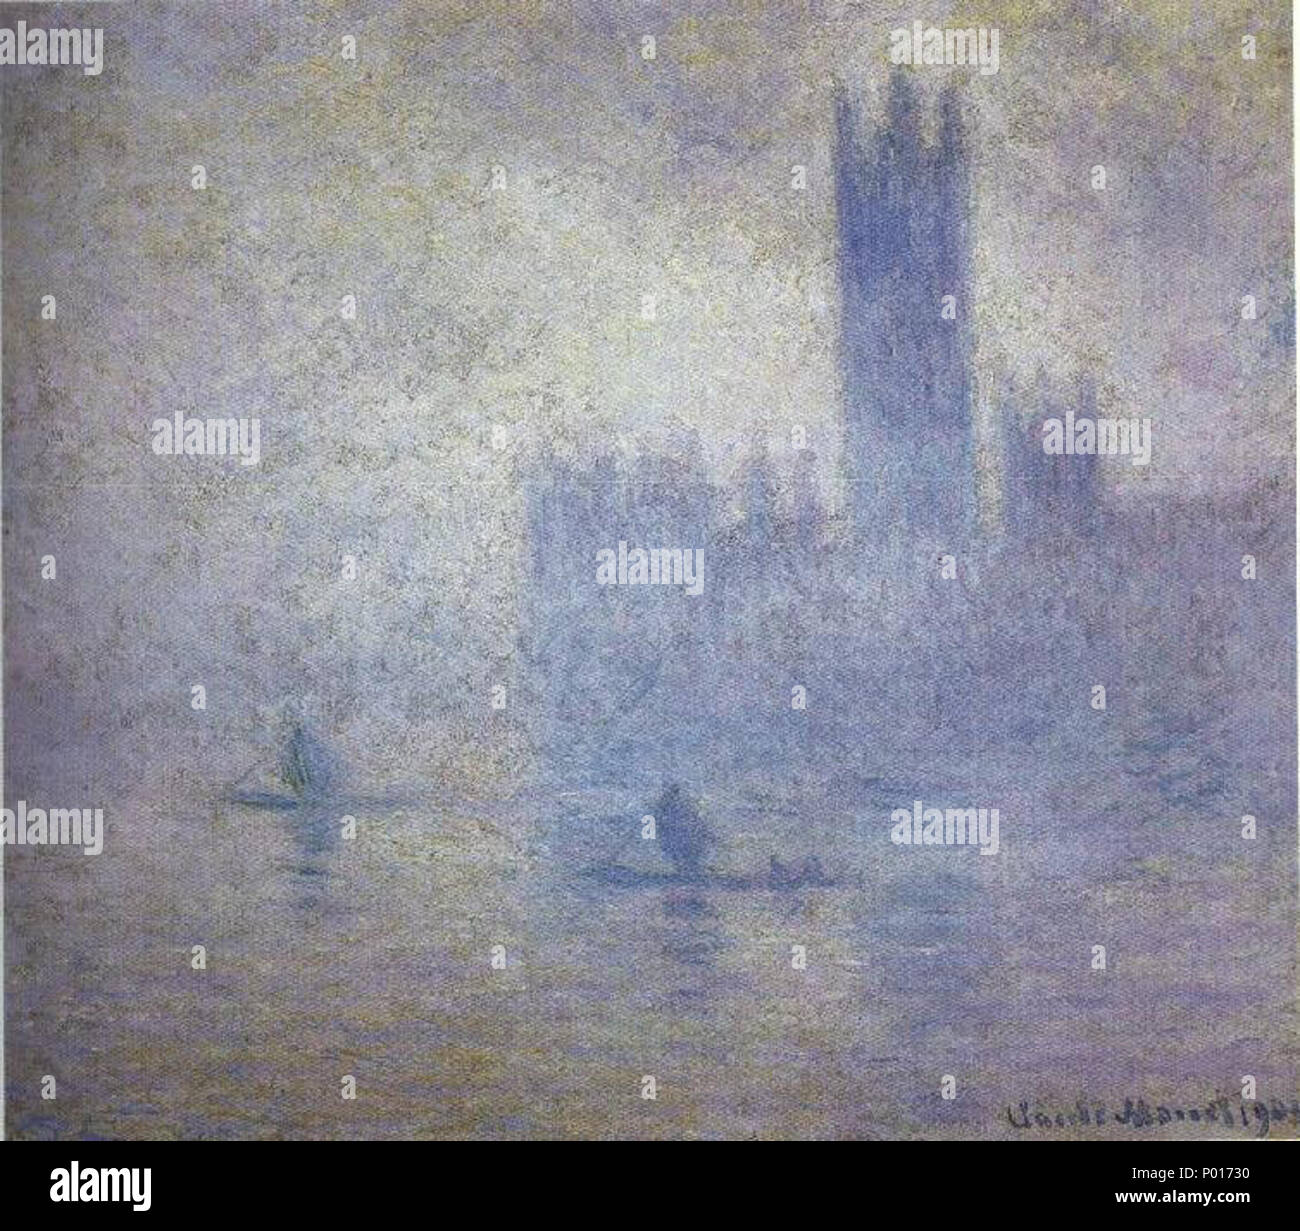 . Français: Le Parlement, Effet de Brouillard Englisch: Parlament, Wirkung von Nebel. 1904 1 Brouillard, London Parlament, Claude Monet Stockfoto